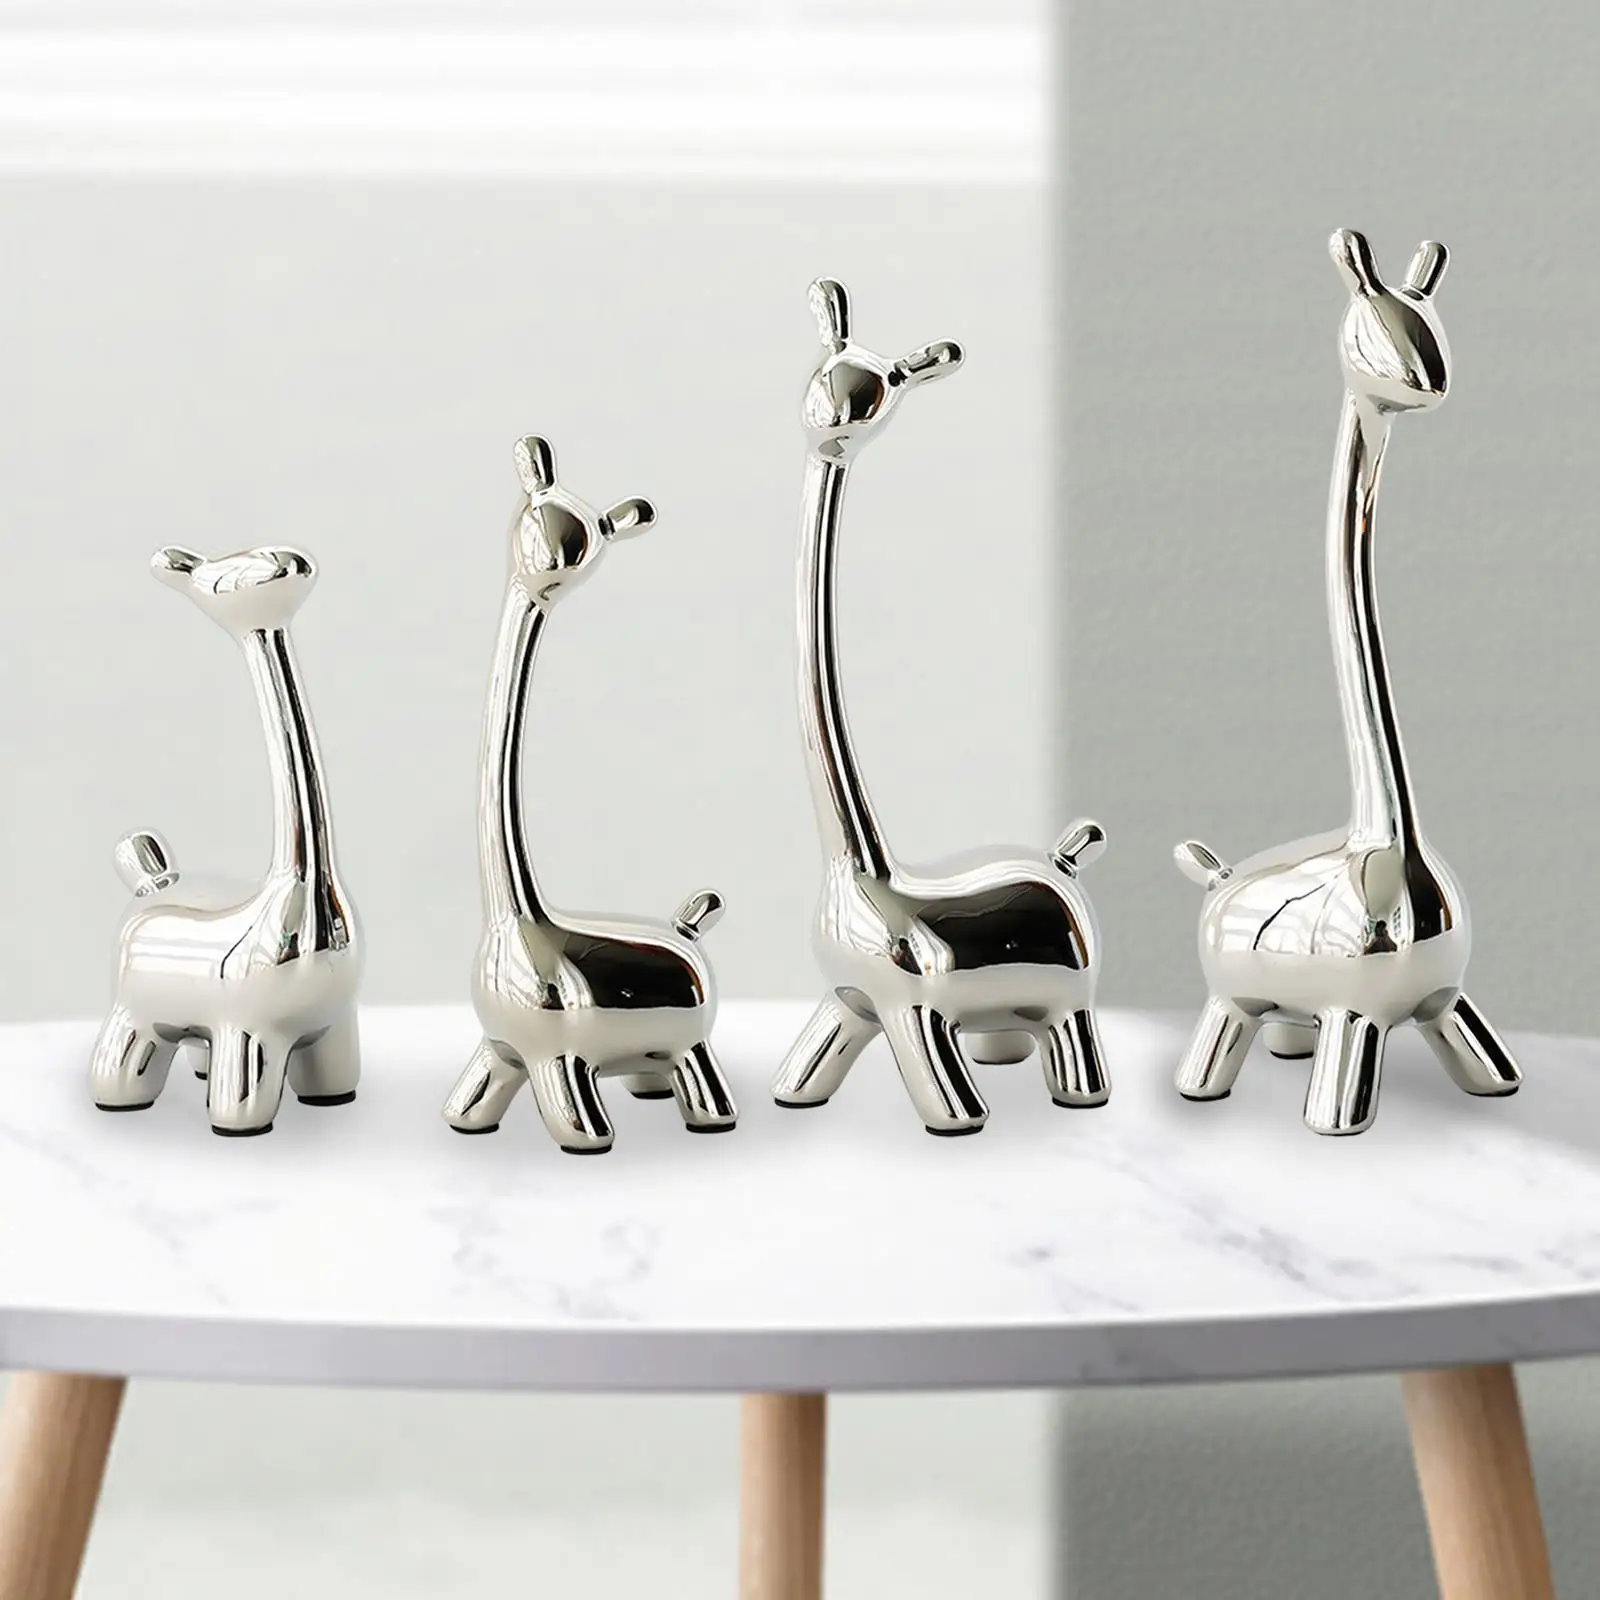 Modern Deer Figurine Ceramic Statue Ornament Nordic Sculpture Decorative for Home Office Table Centerpiece Decor Wedding Gift